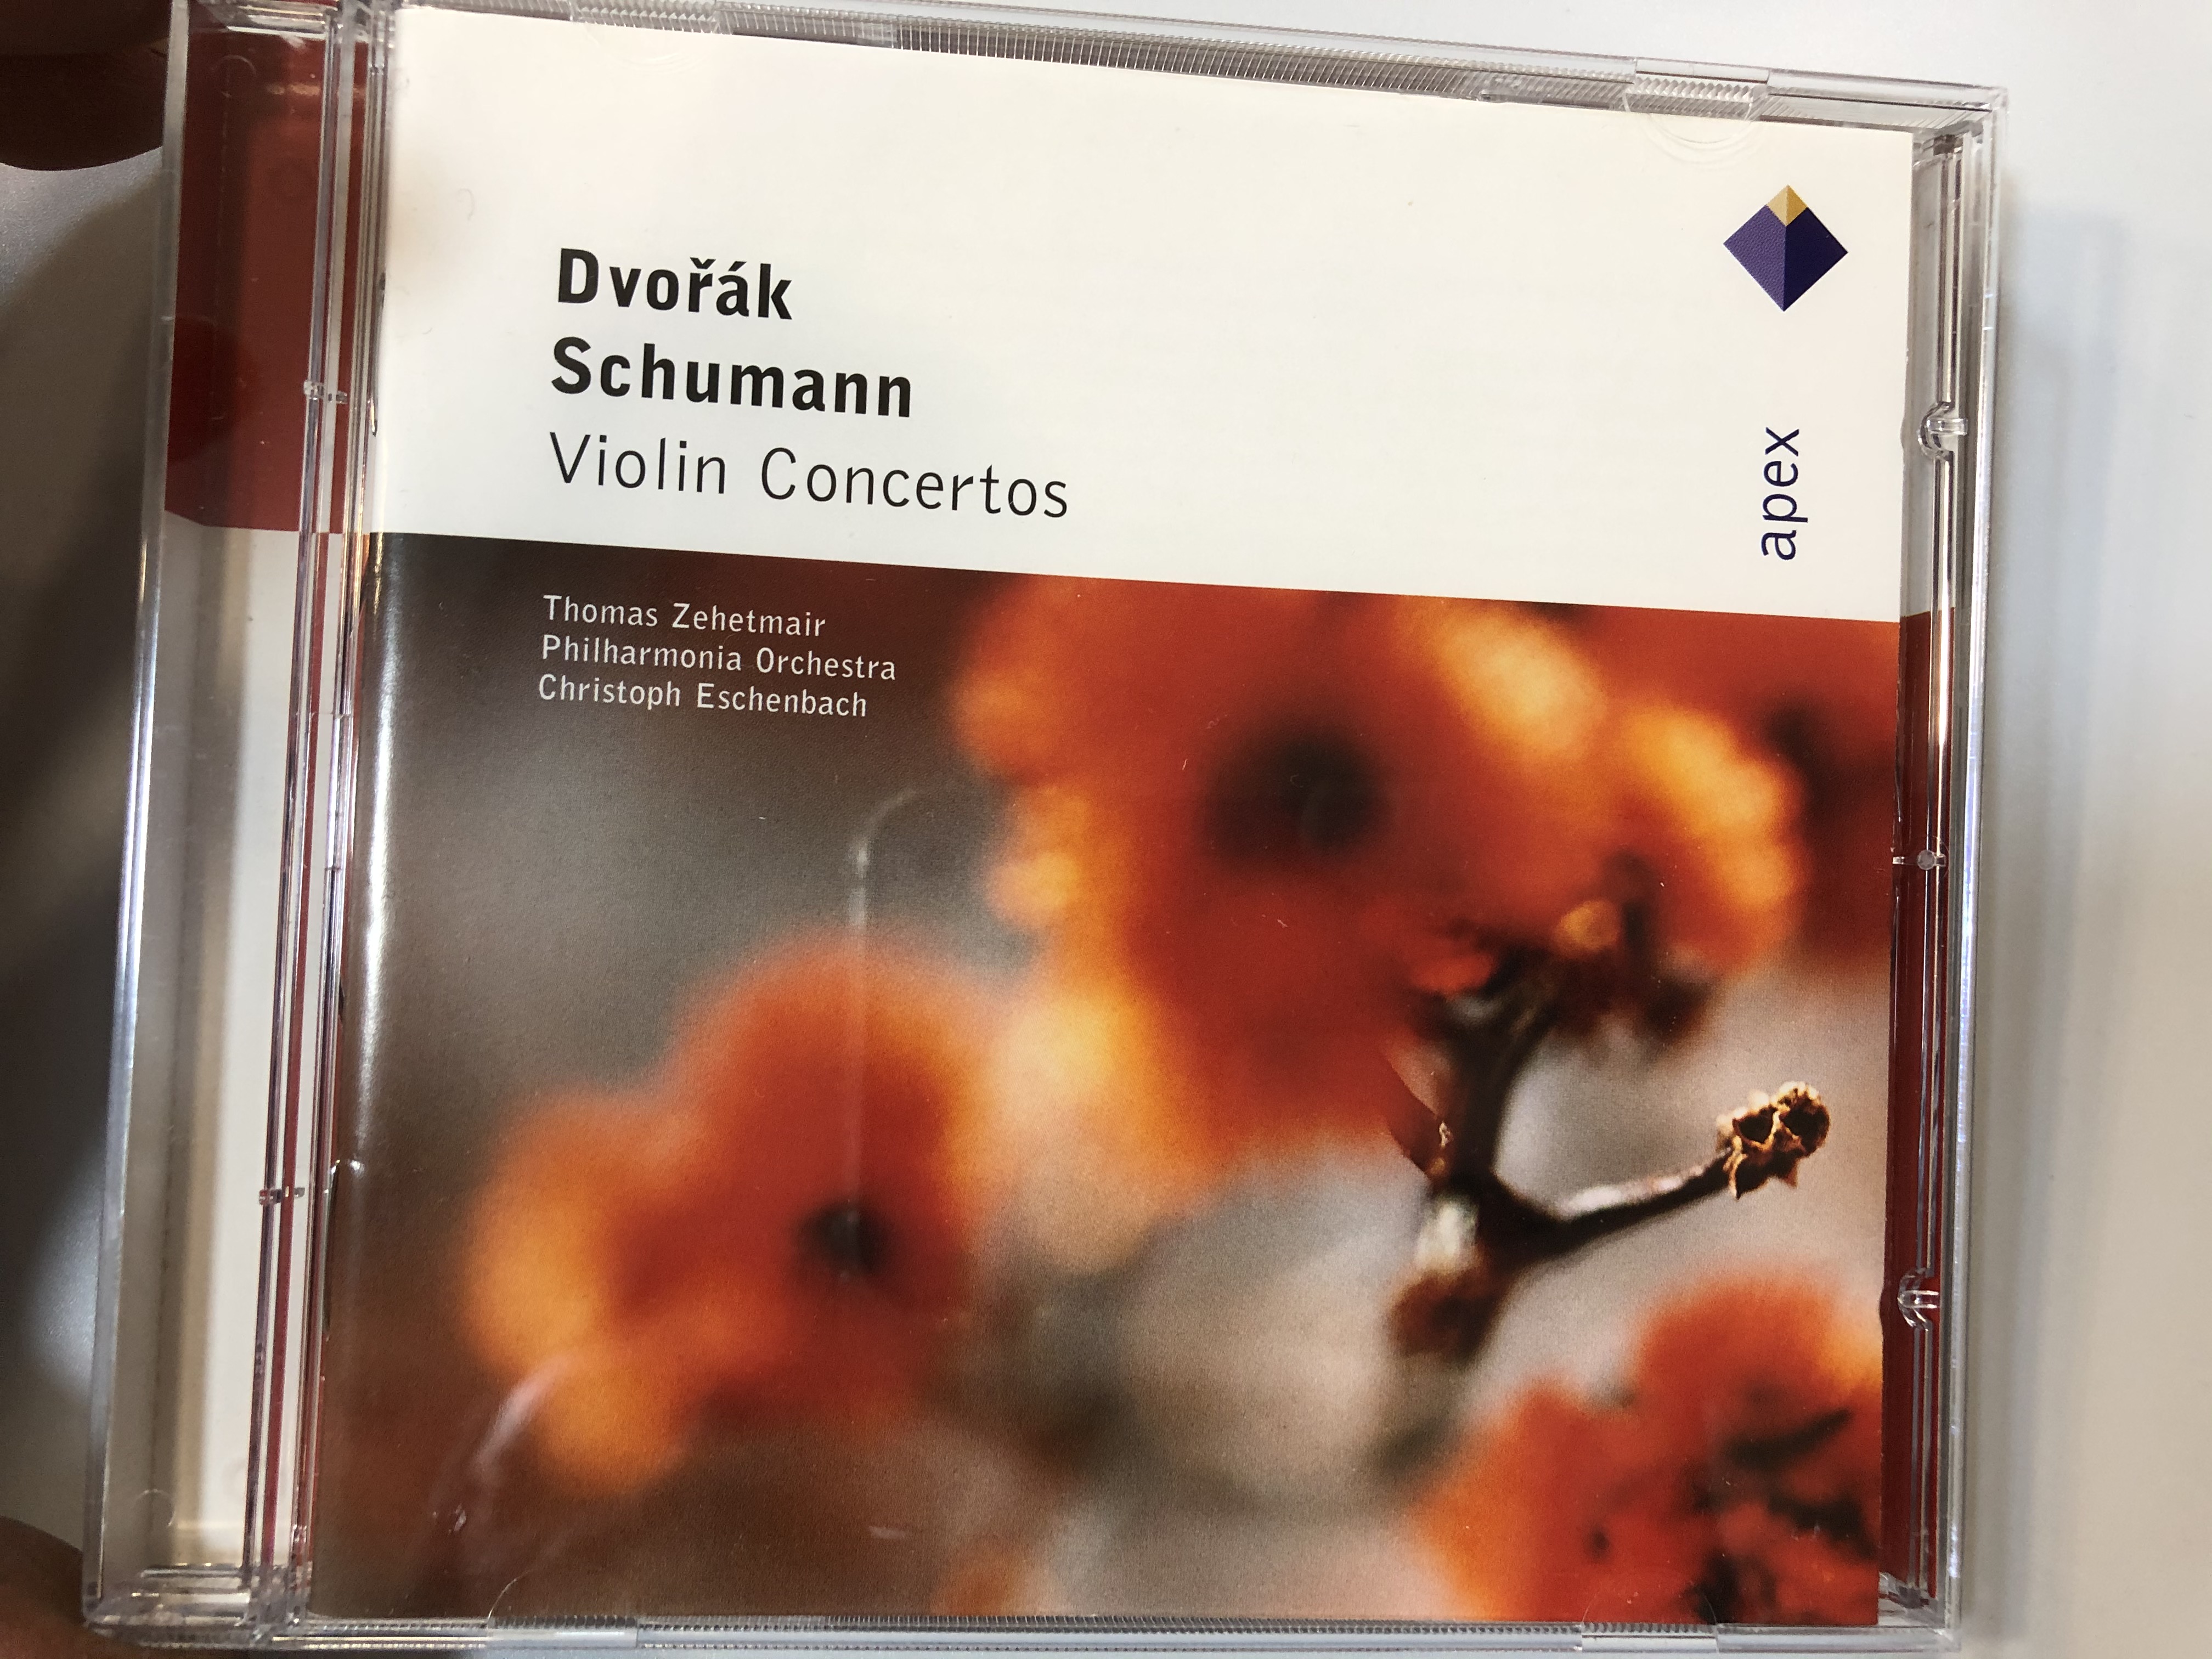 dvo-k-schumann-violin-concertos-thomas-zehetmair-philharmonia-orchestra-christoph-eschenbach-apex-audio-cd-2003-0927-49517-2-1-.jpg